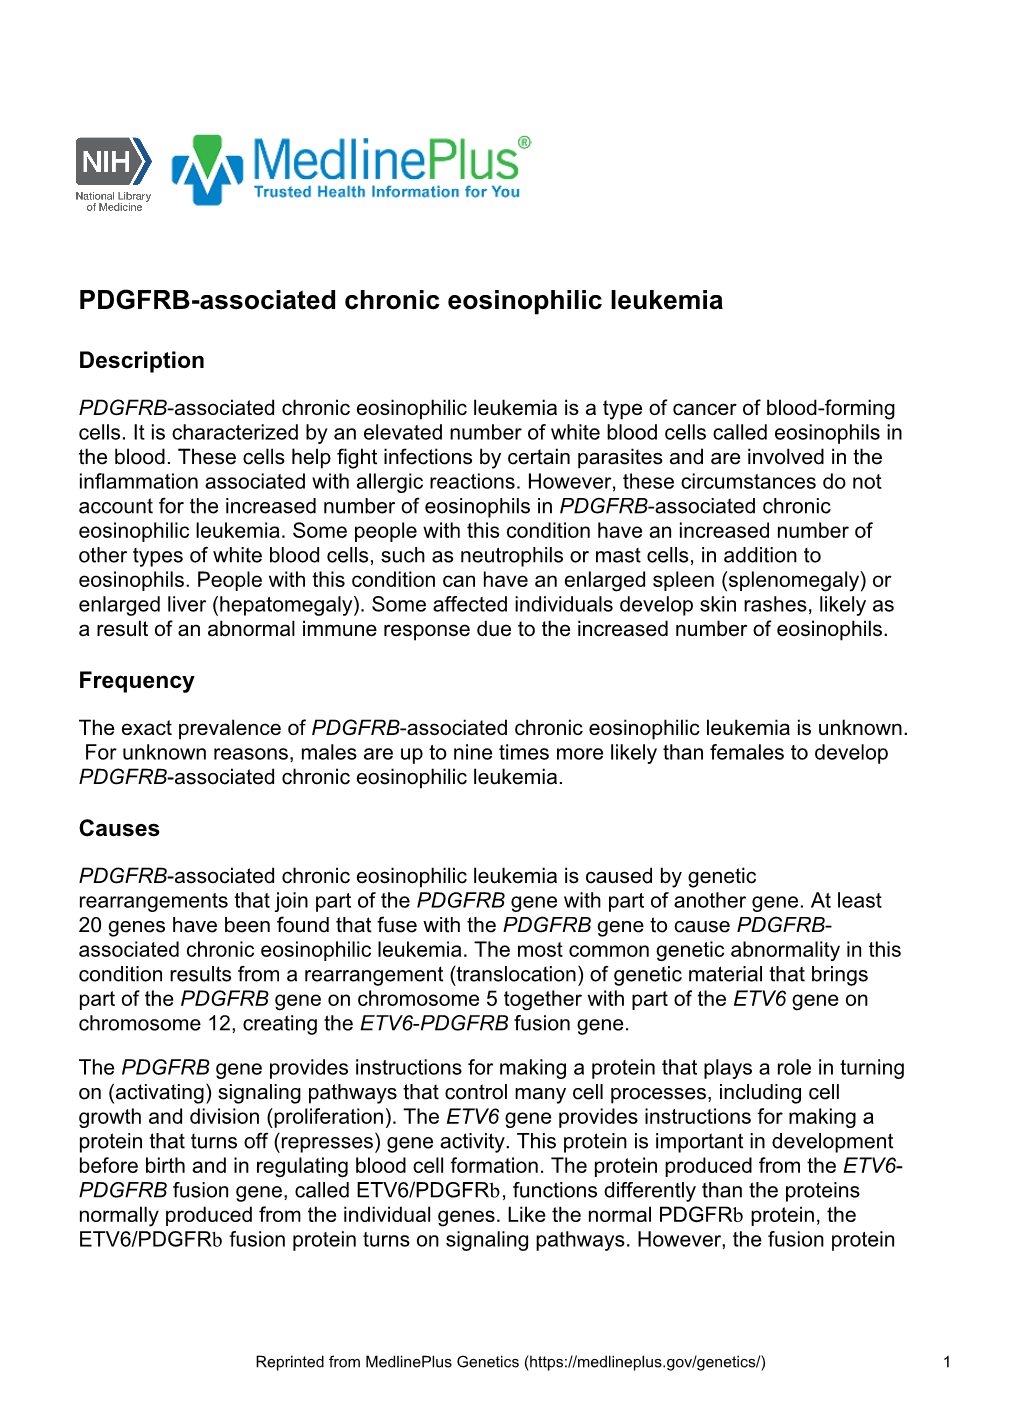 PDGFRB-Associated Chronic Eosinophilic Leukemia